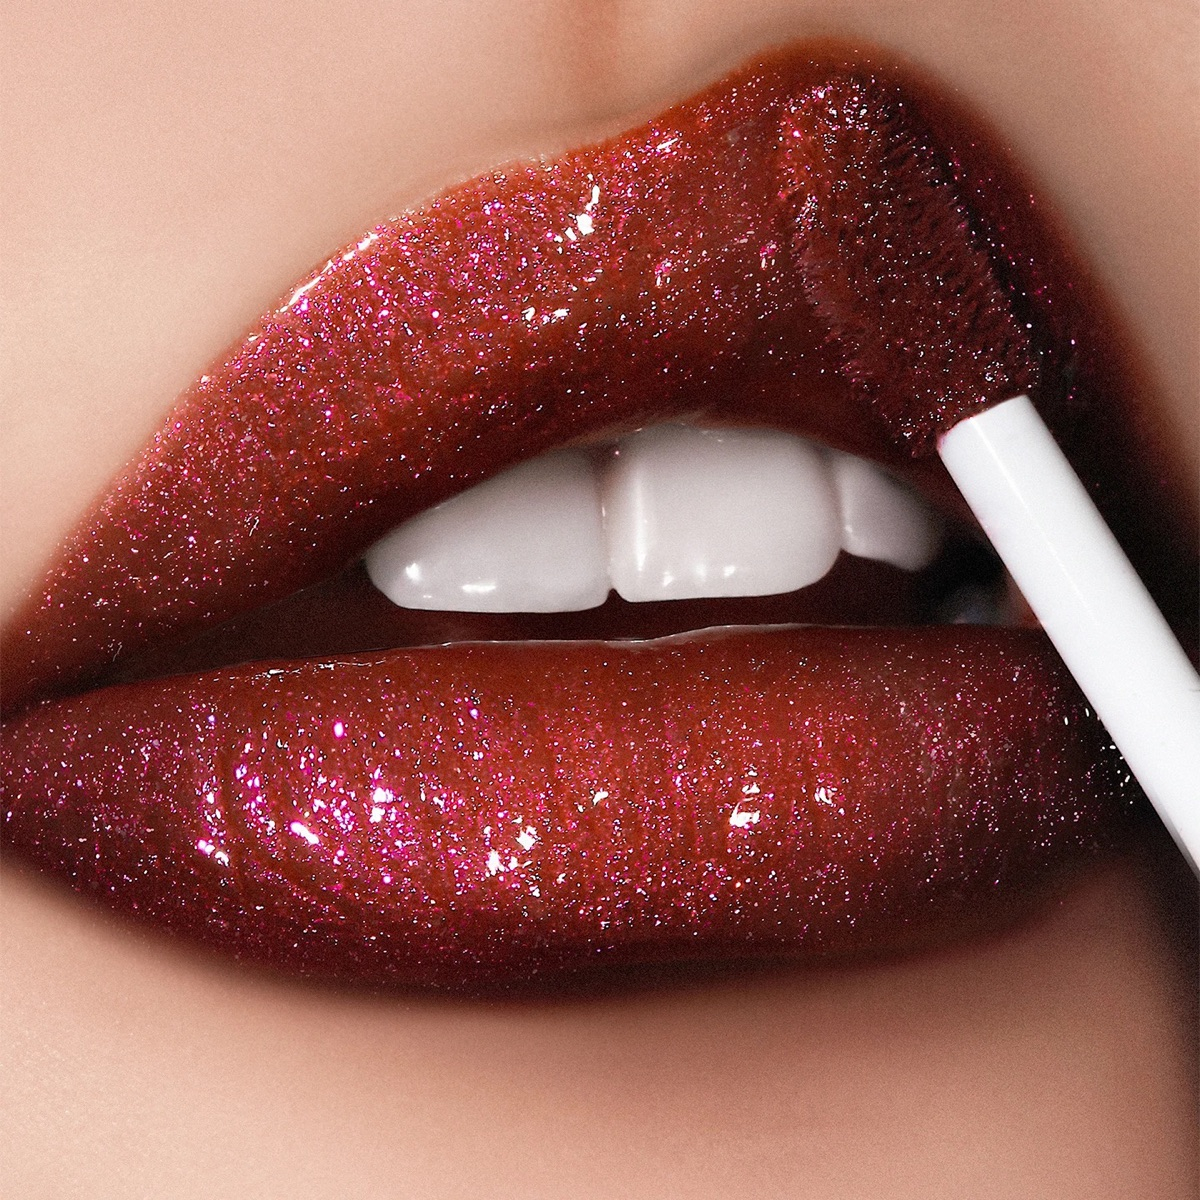 Where to Buy TikTok's Favorite Pat McGrath Lipstick Before Gone! - E! Online